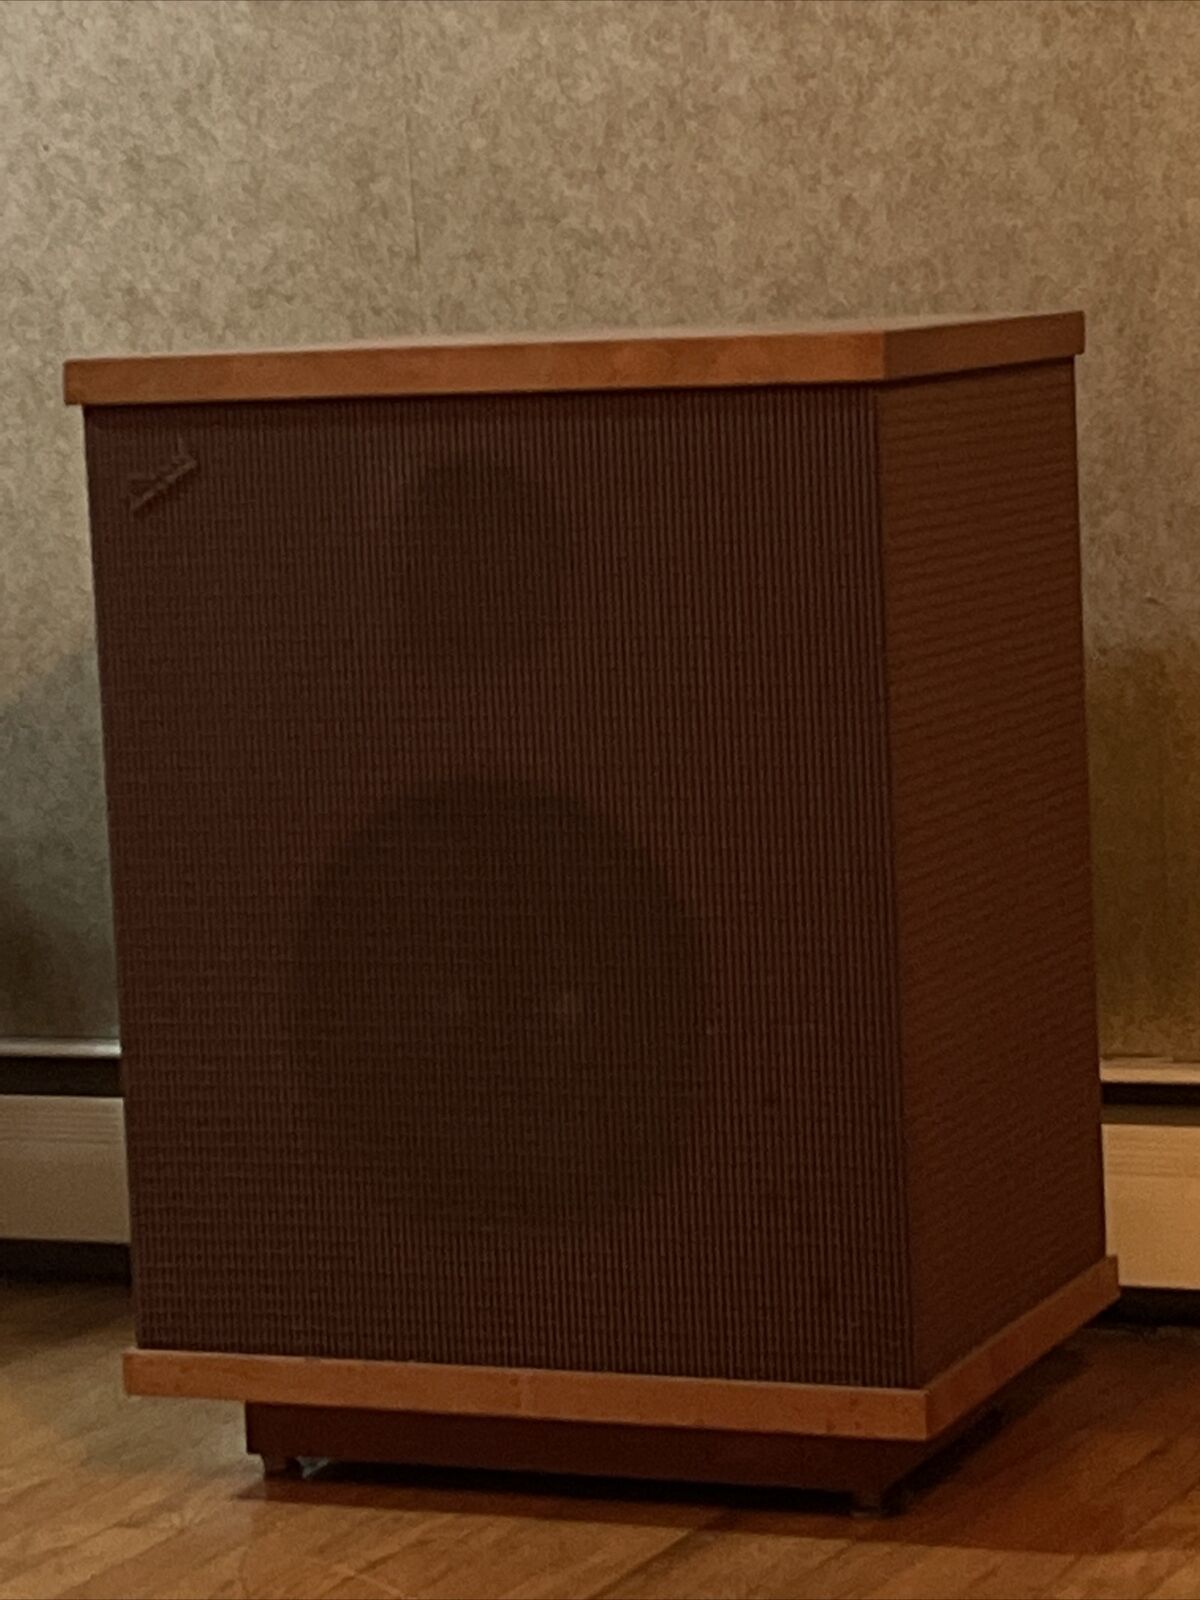 vintage bozak speaker - Model 302 - Working Tested Speaker Sub Tweeter Pickup Lo